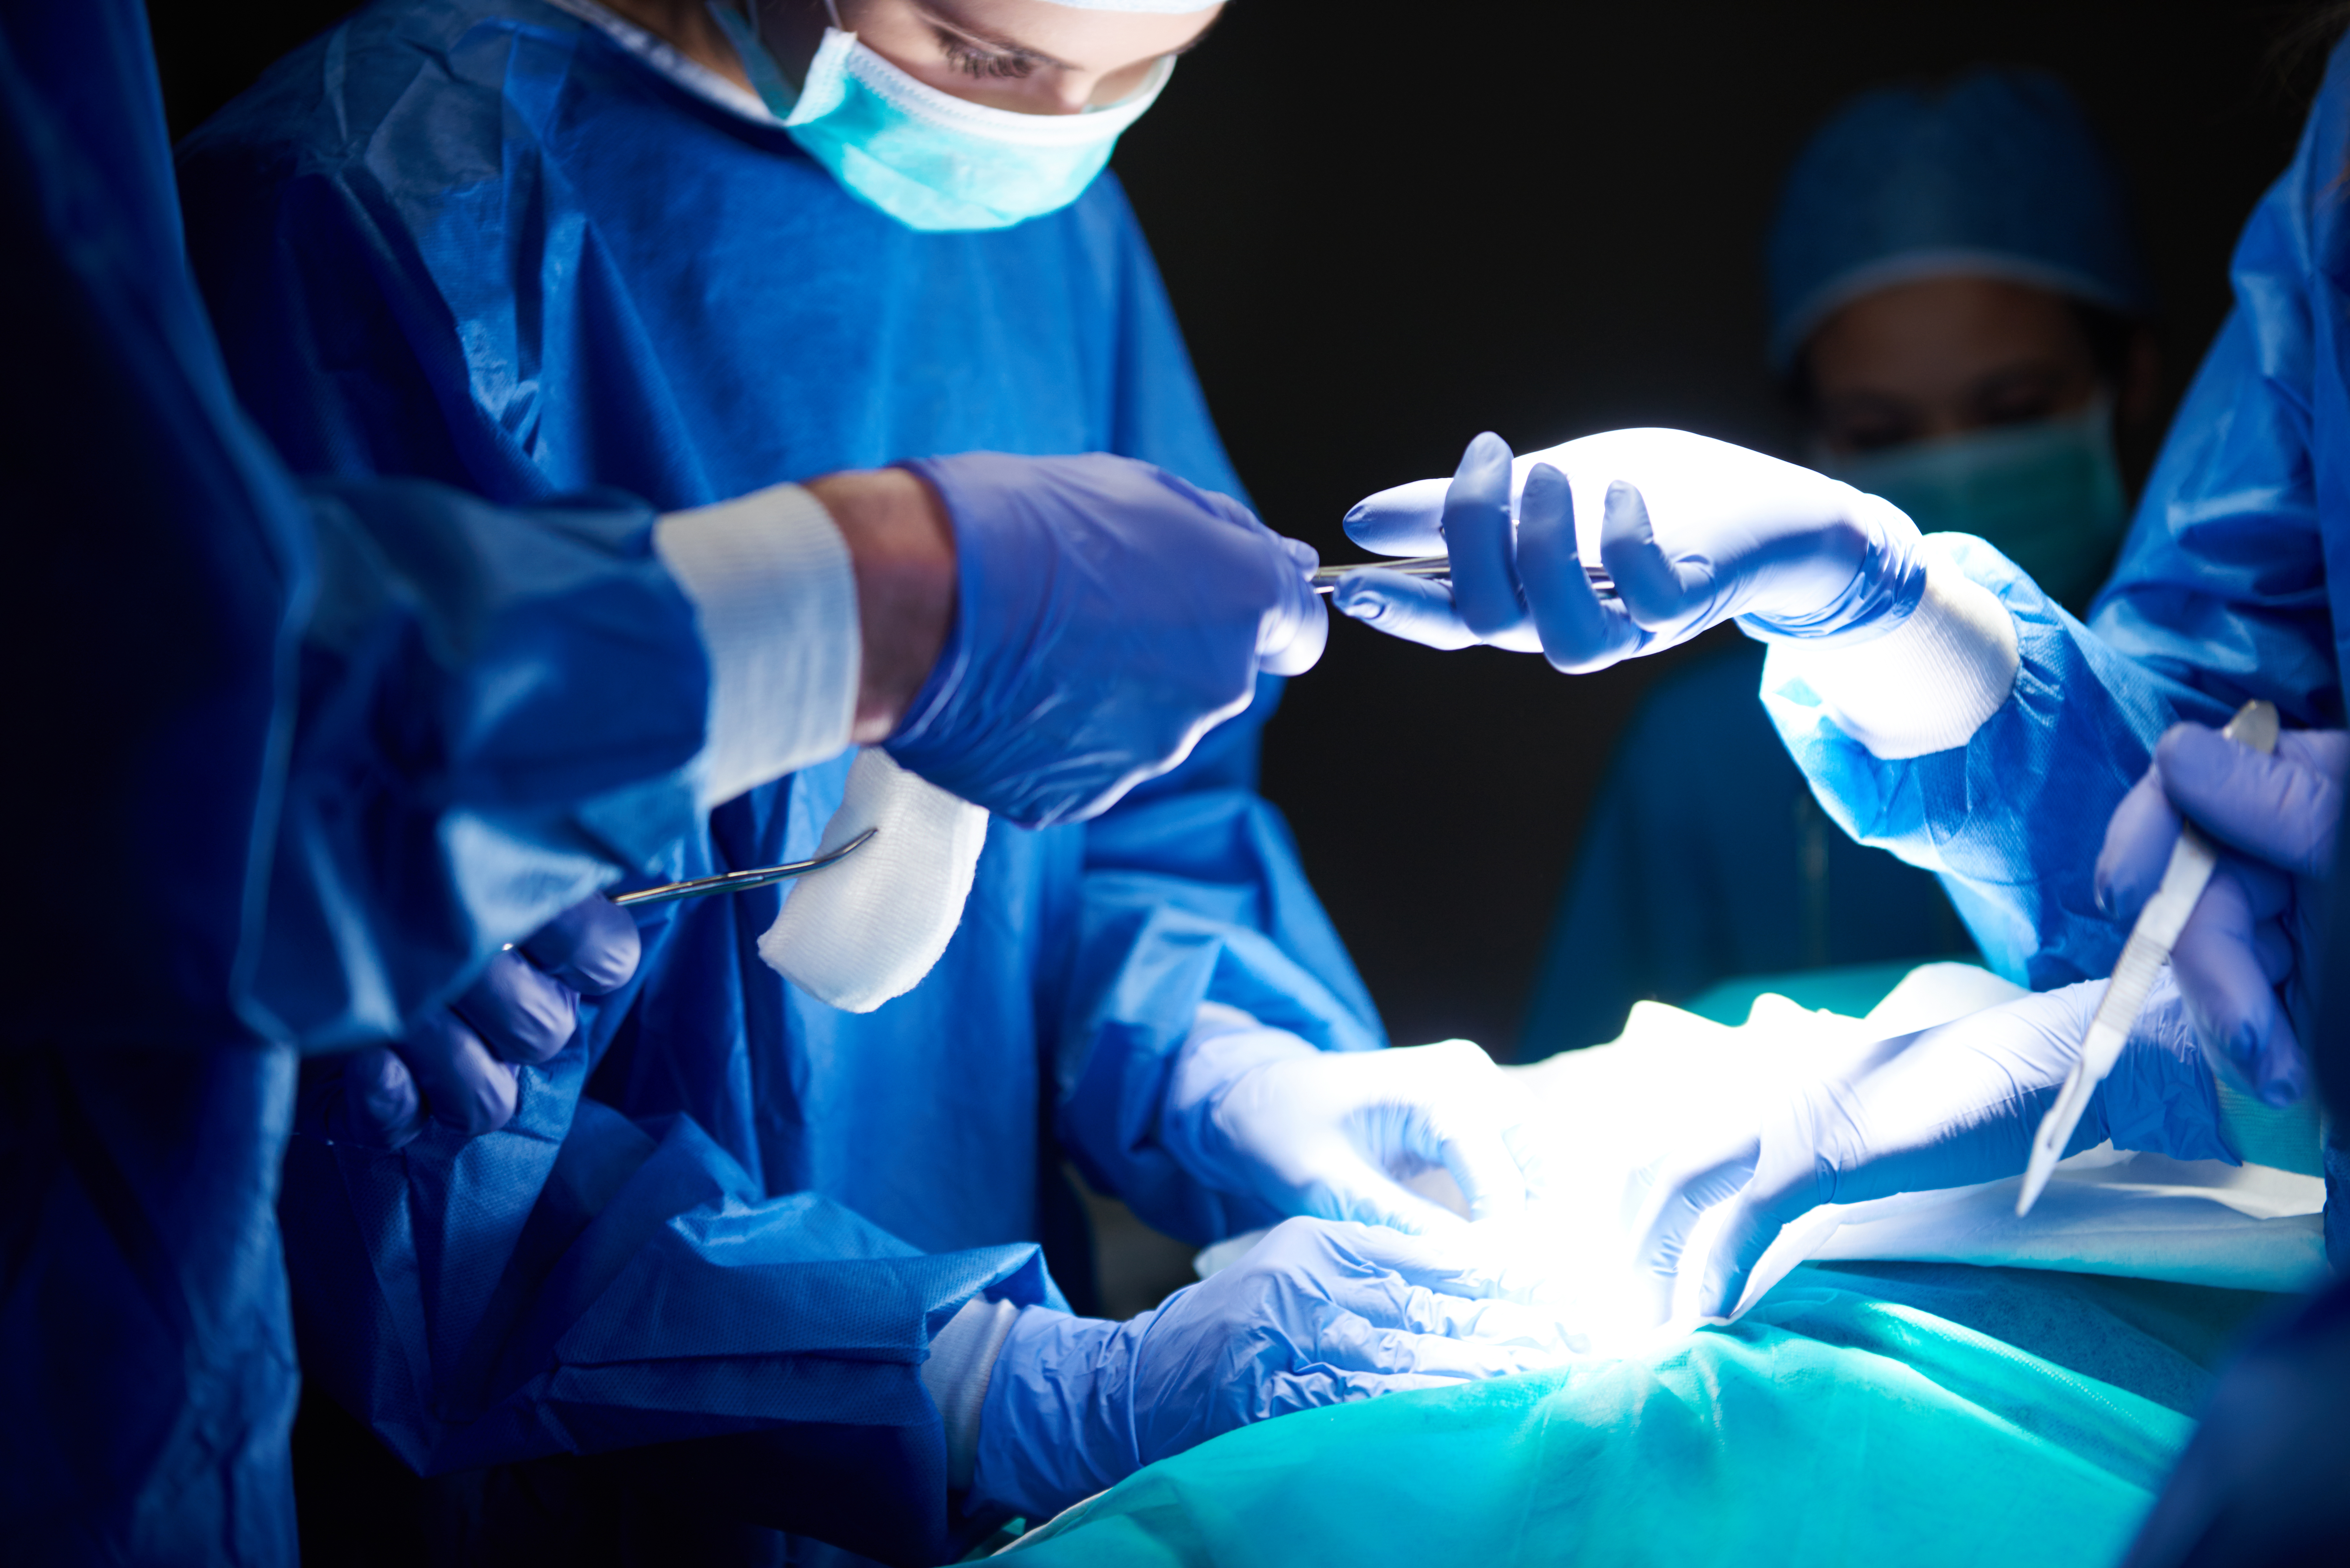 As Características que Favorecem a Excelência no Centro Cirúrgico